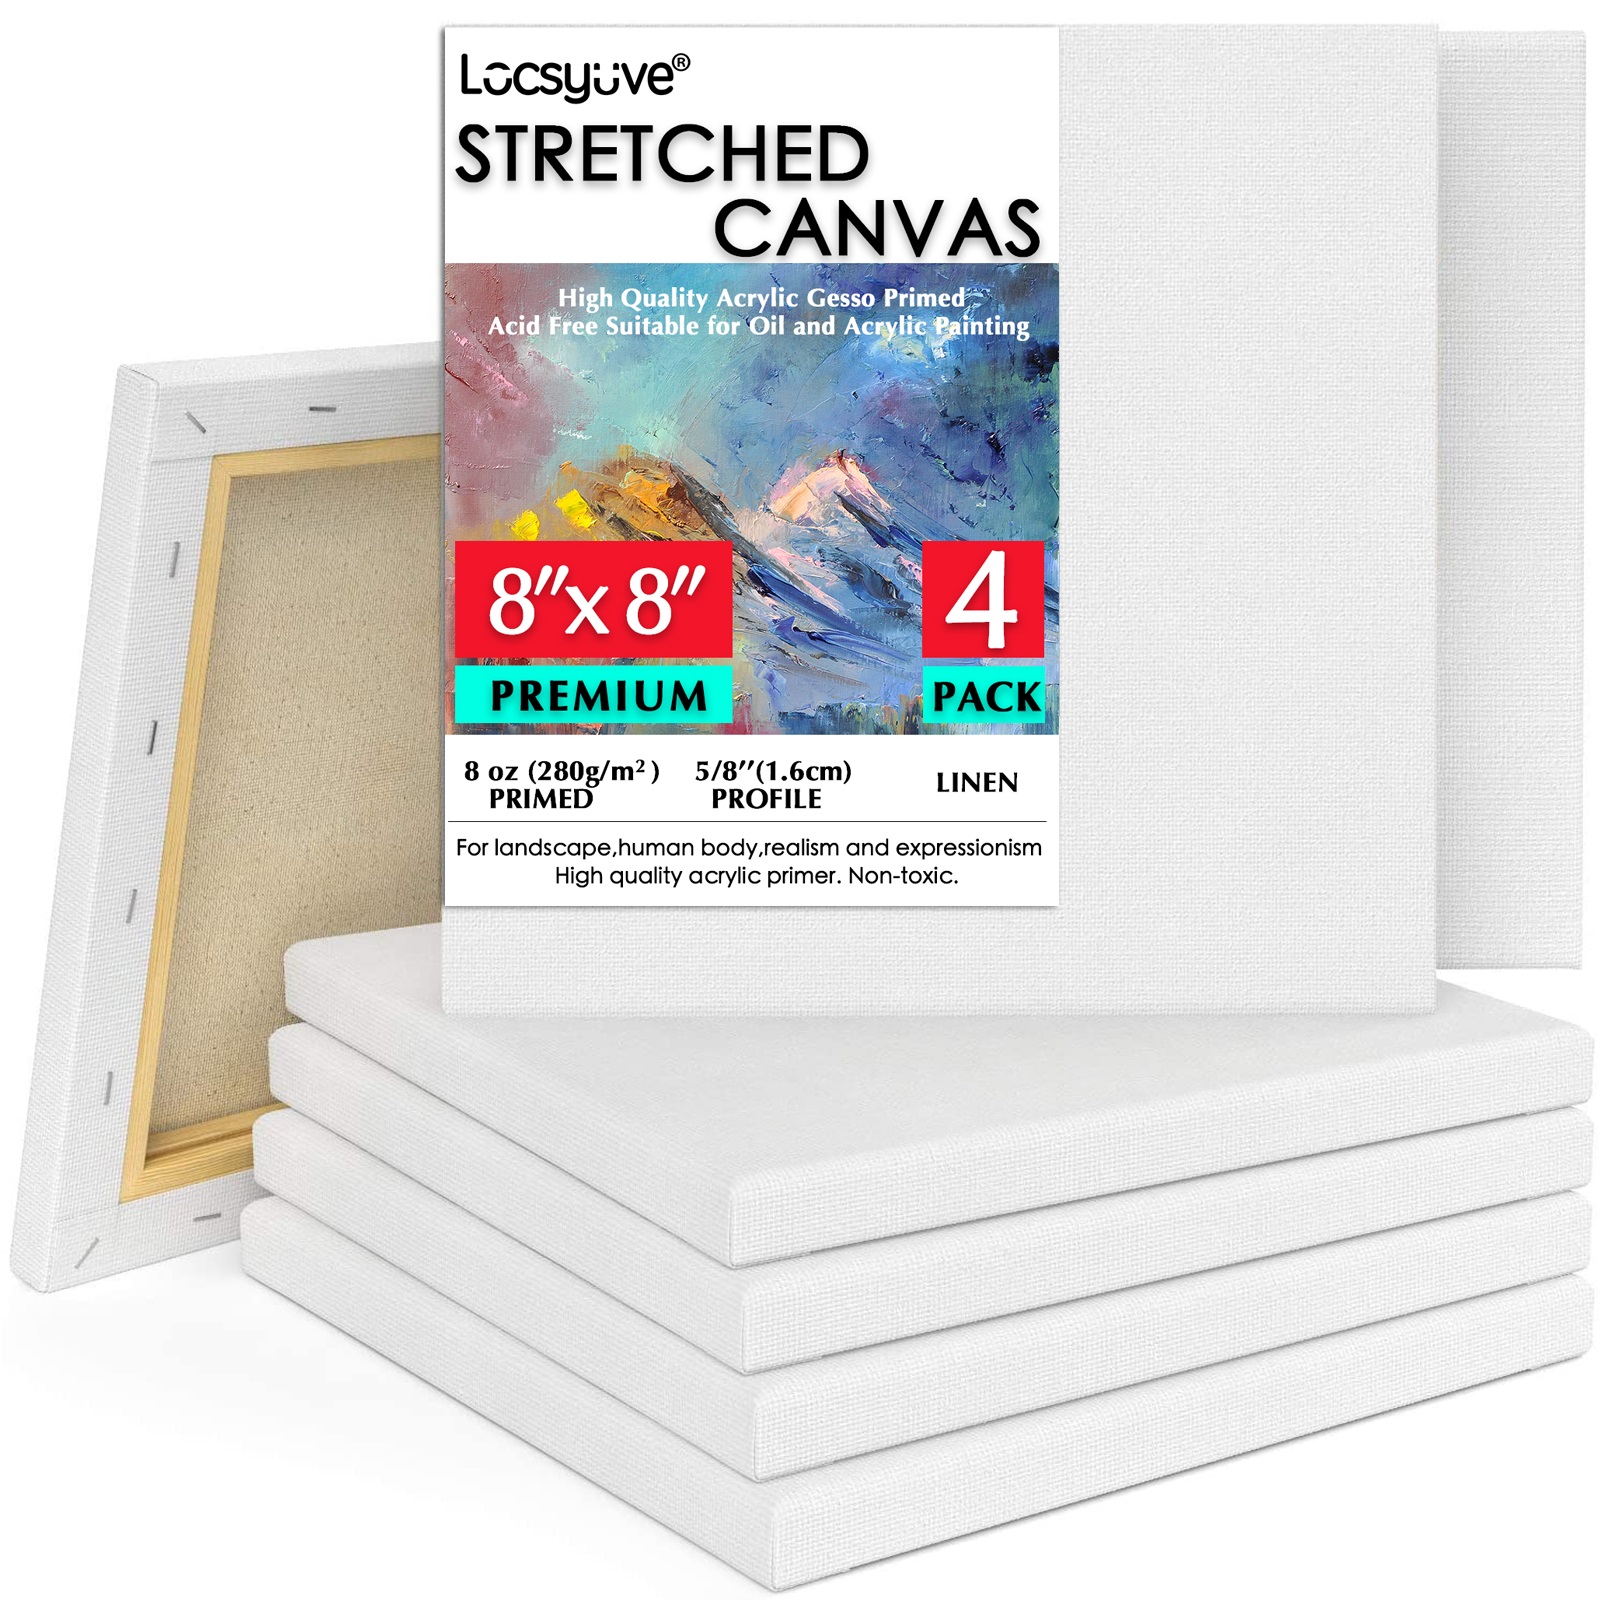 Locsyuve Stretched Canvas, Pack of 4, 8x8 Inches, Square White Canvas, 100% Linen, 8 Oz Gesso-Primed, Art Supplies Mini Canvas